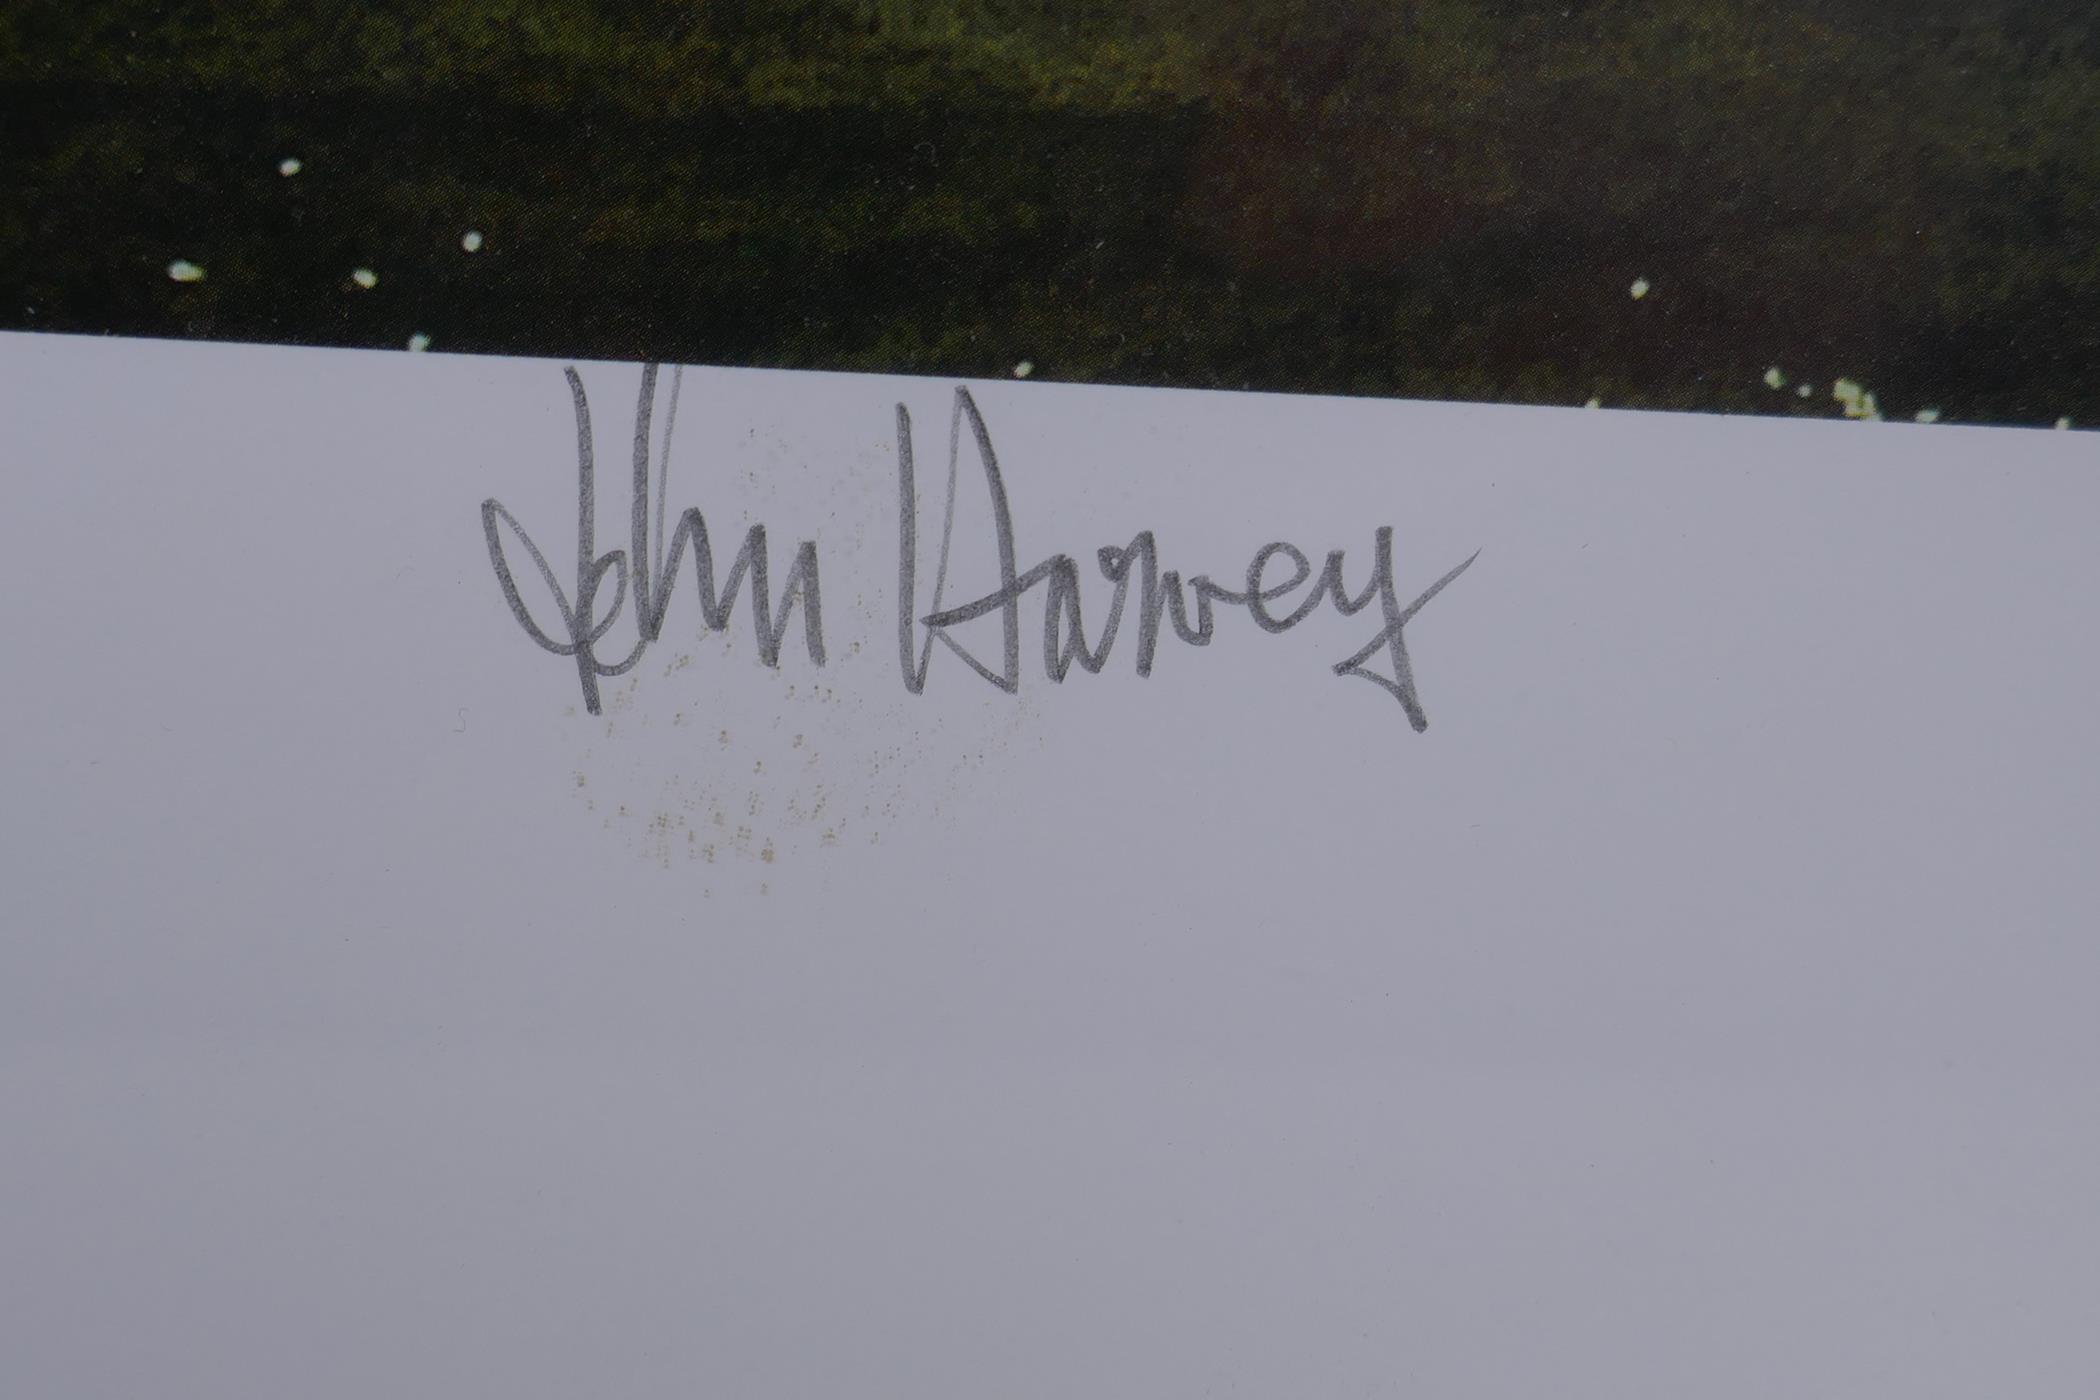 John Harvey, village cricket, limited edition print, 125/400, pencil signed, 50cm x 37cm - Image 3 of 5